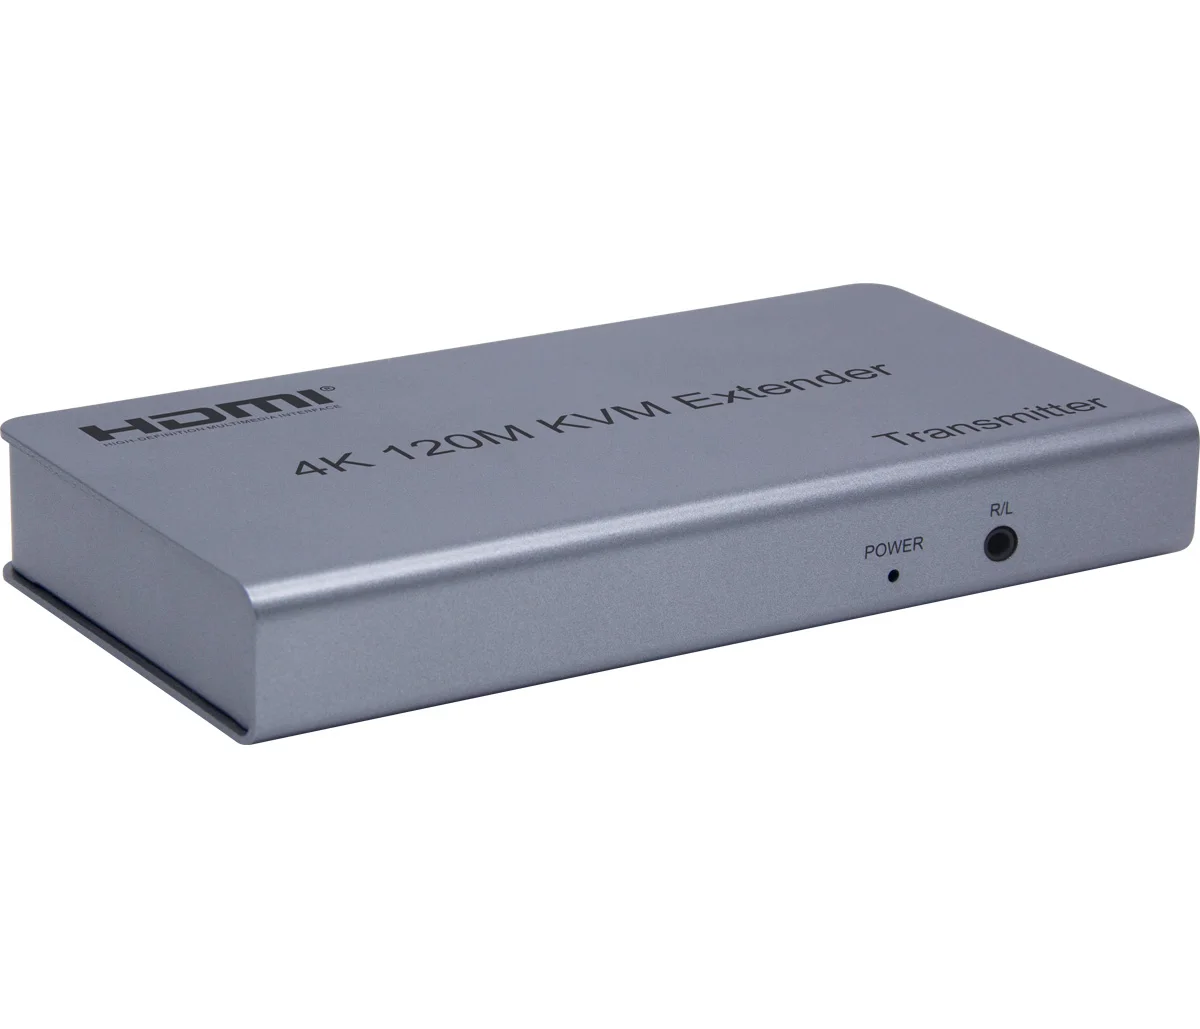 KVM-Удлинитель HDMI 4K 120 м RJ45 Ethernet Cat5e Cat6 кабель-конвертер TX RX поддержка USB мыши